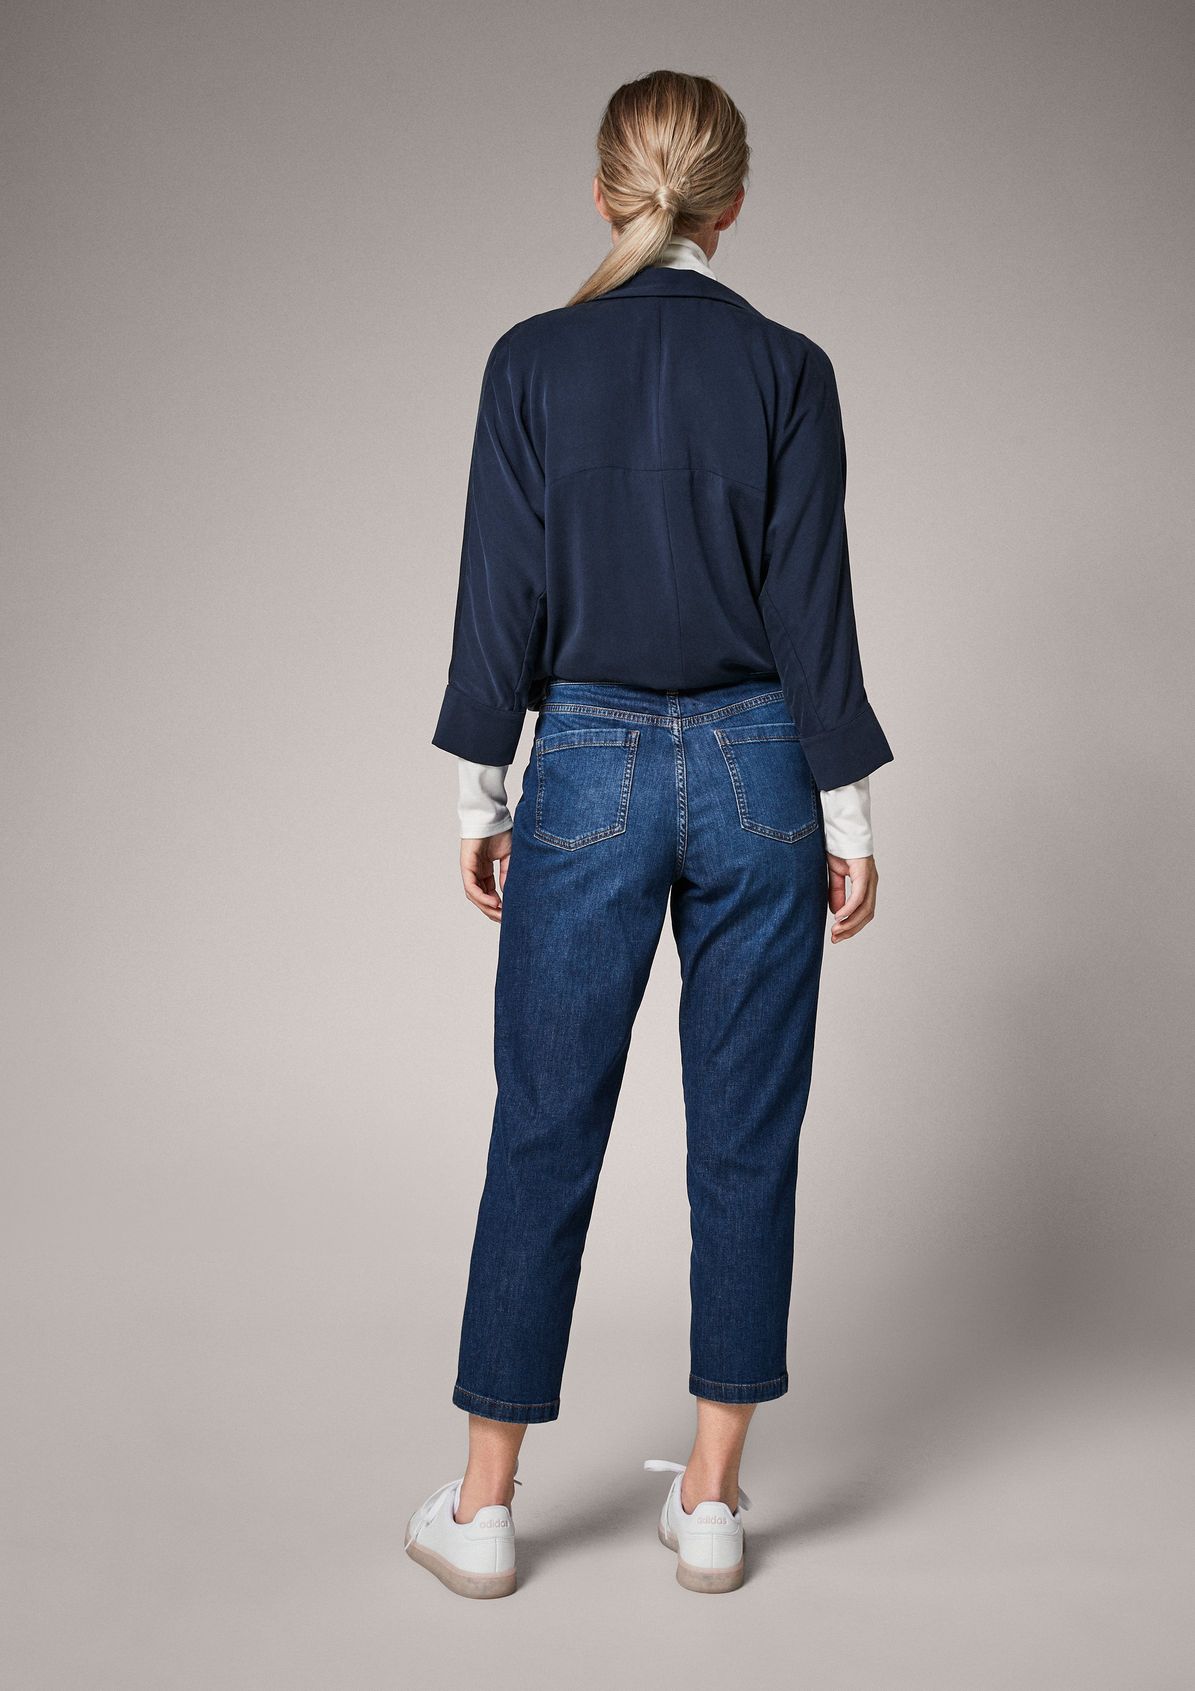 discount 83% Vero Moda straight jeans Black 42                  EU WOMEN FASHION Jeans NO STYLE 